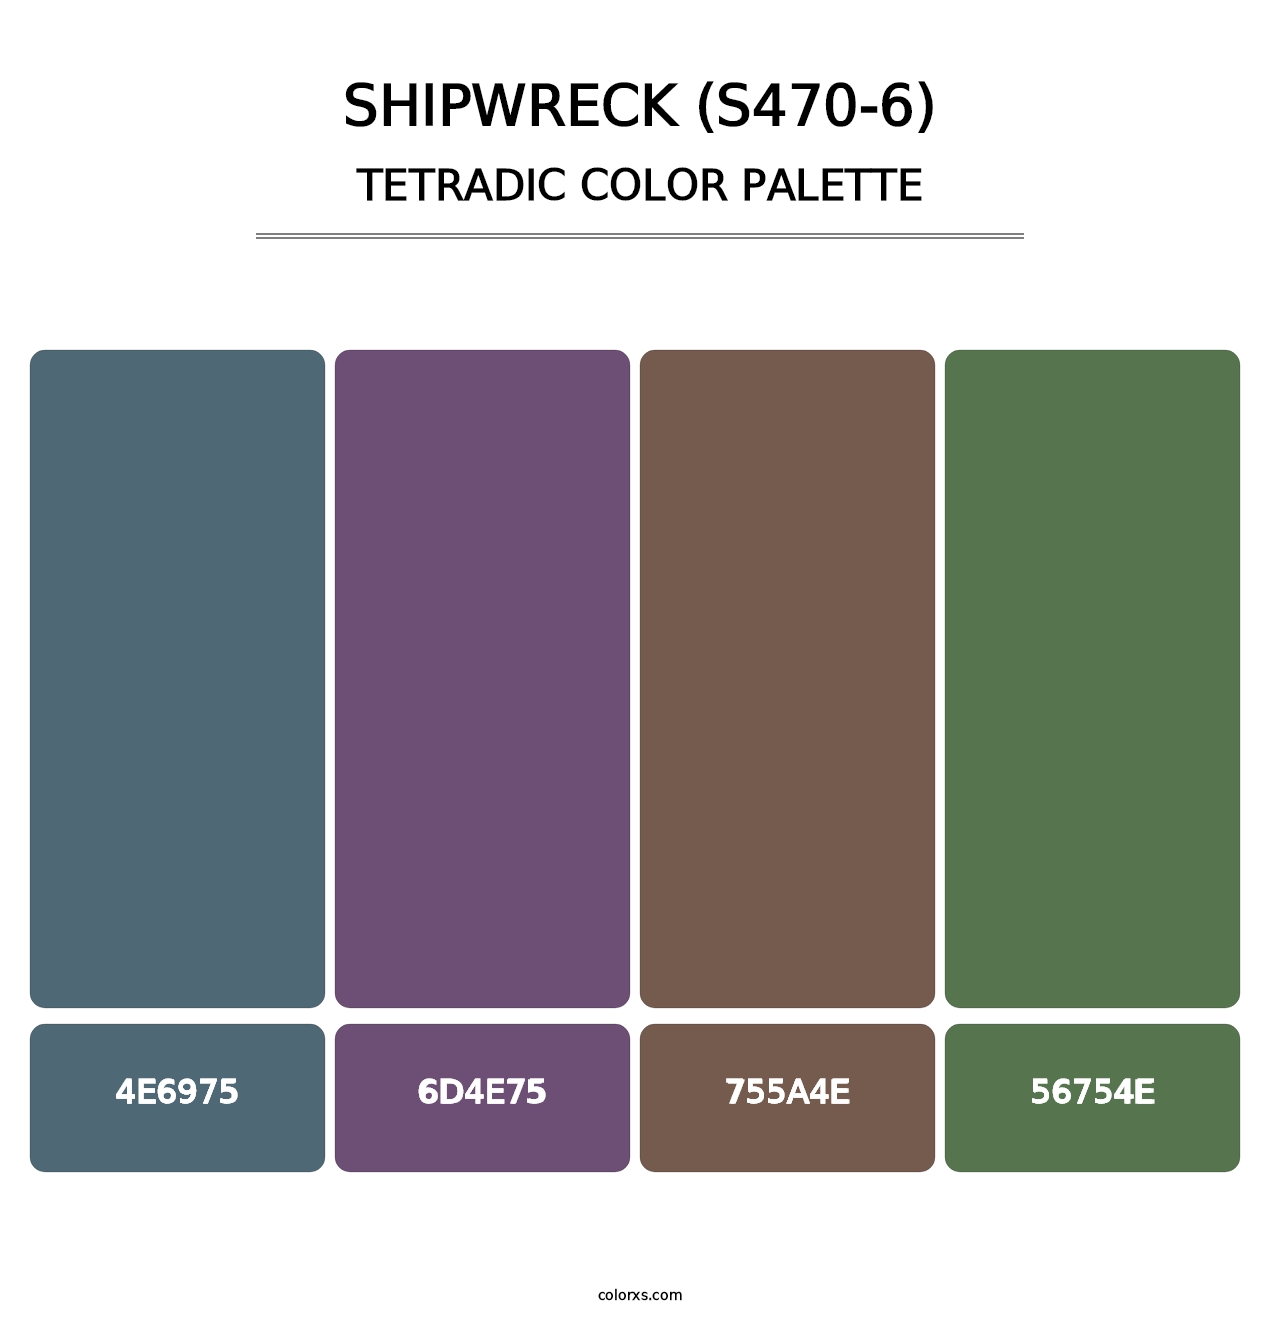 Shipwreck (S470-6) - Tetradic Color Palette